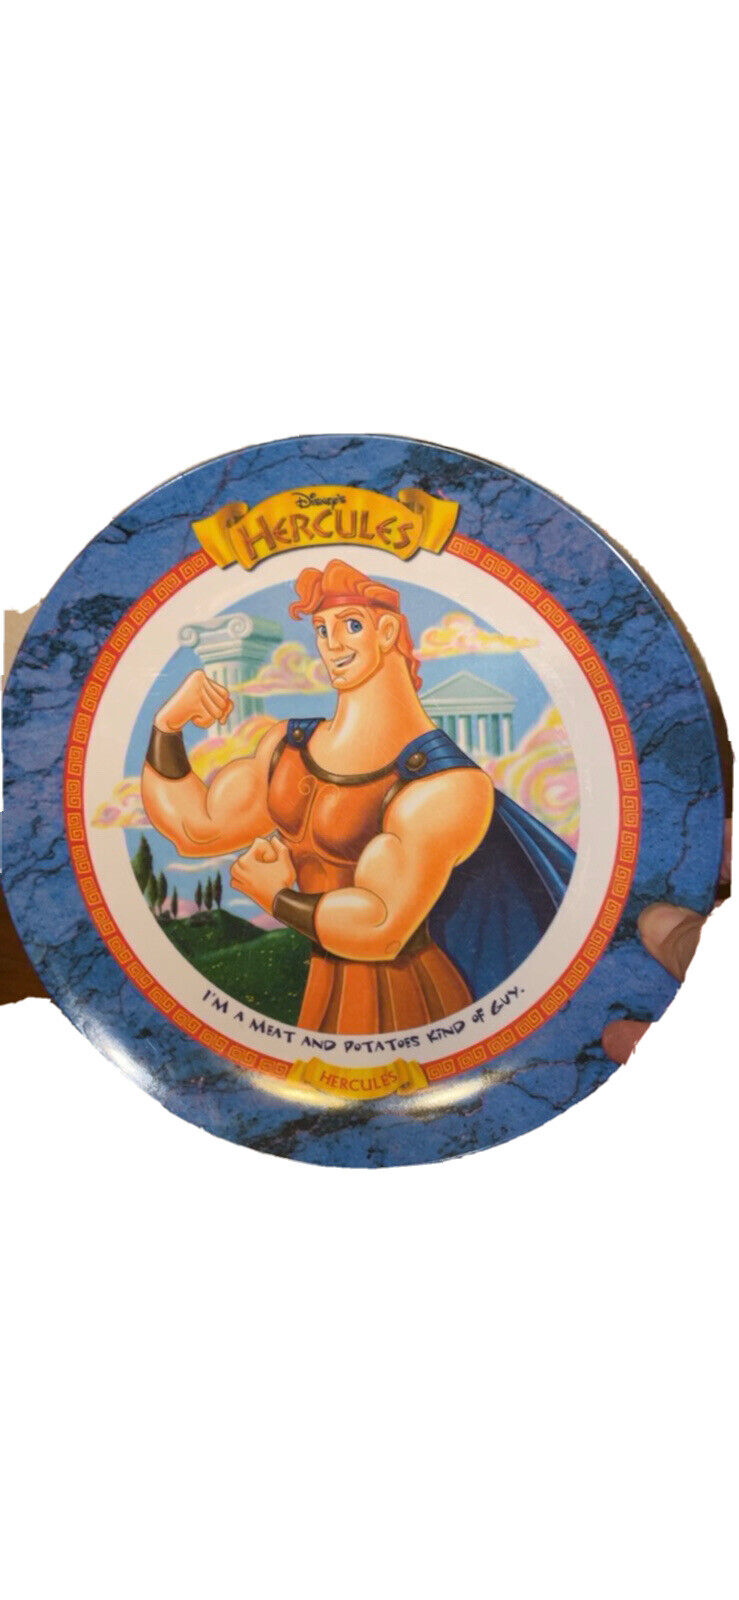 Disney Hercules Hercules Mcdonald's Collectors Melamine Plate 1997 Vintage 9.5”